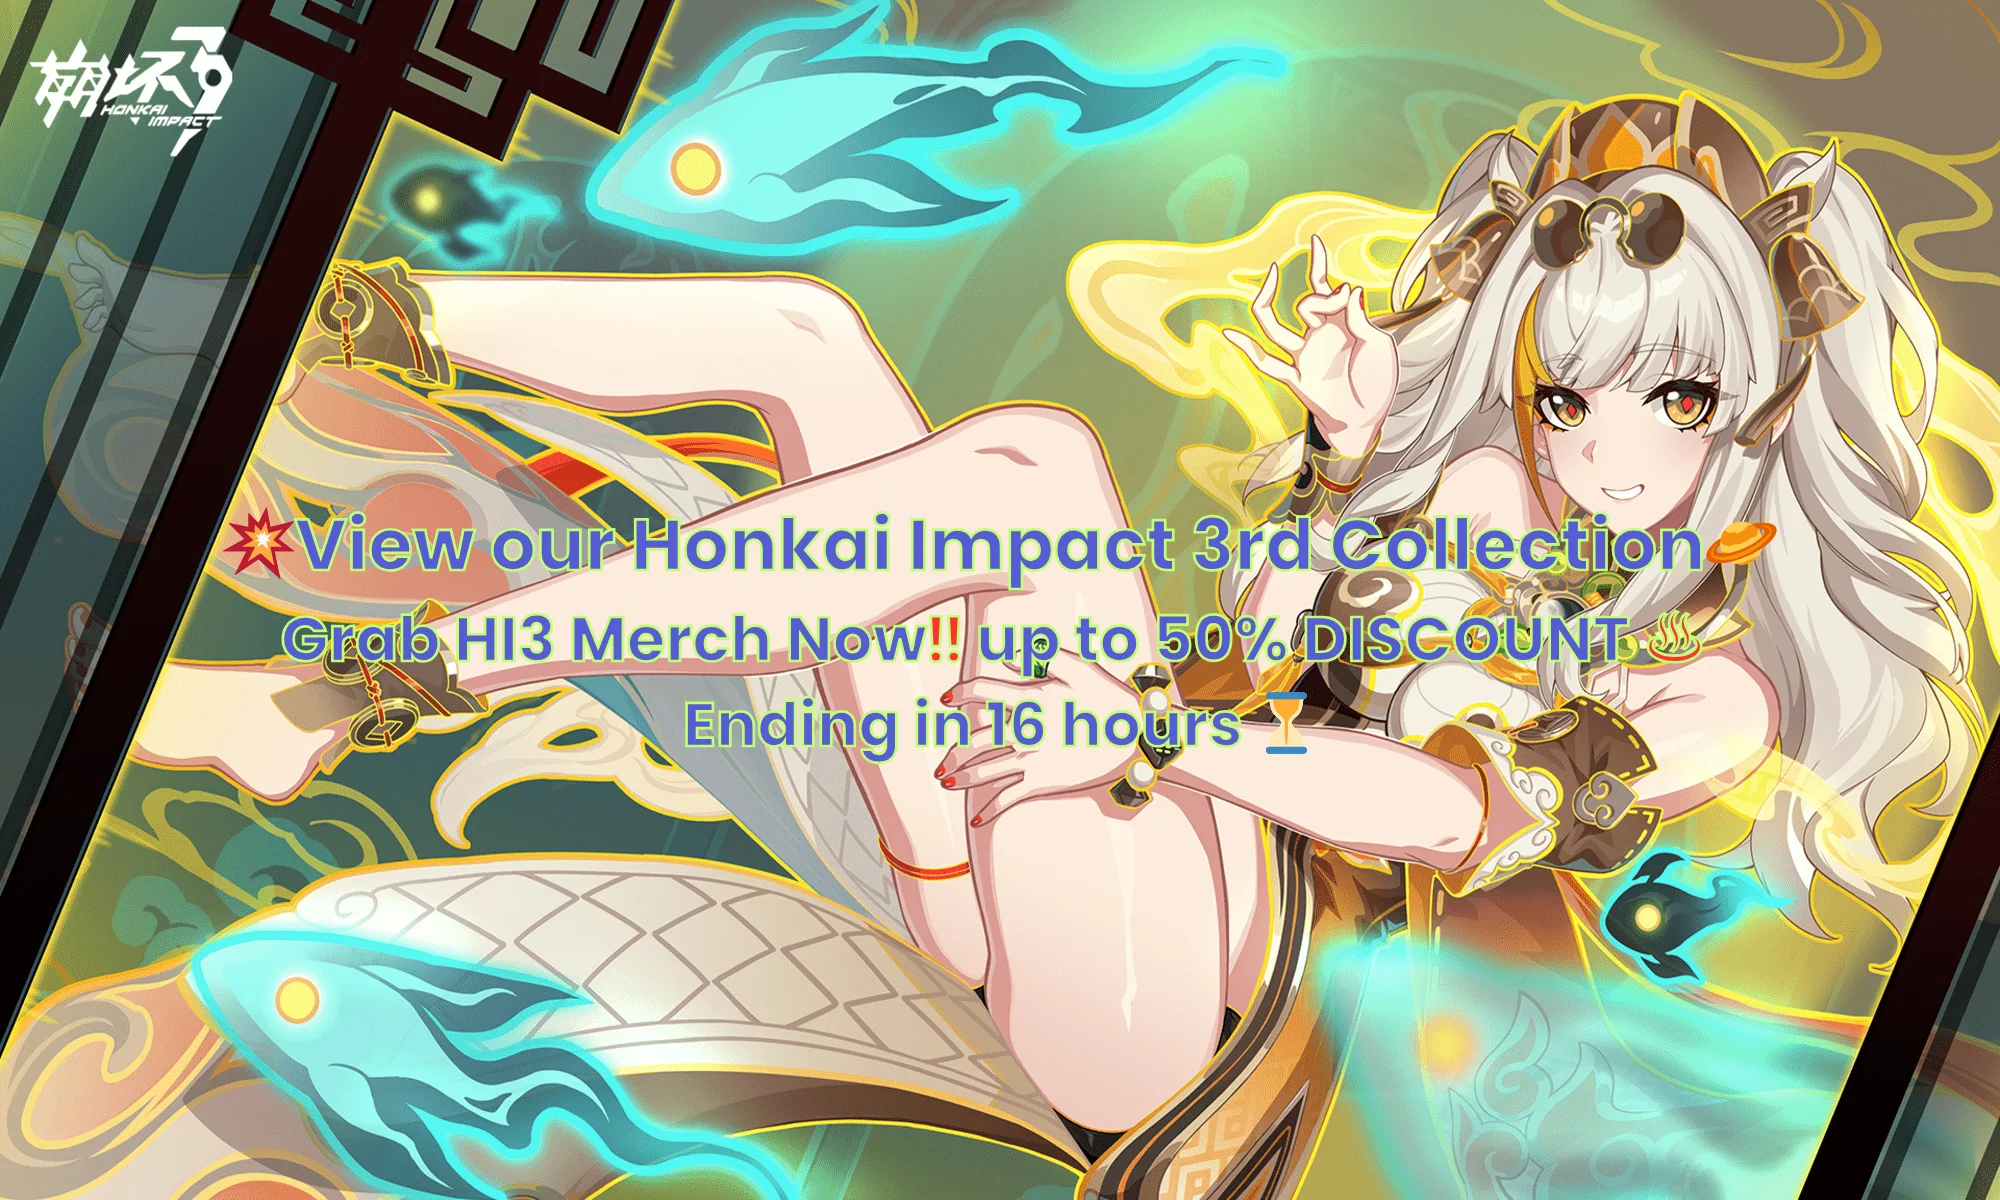 Honkai Impact 3 Merchandise, Honkai Impact Merch, Honkai Impact 3rd Merchandise, Honkai Impact Merchandise, Honkai Impact Shop